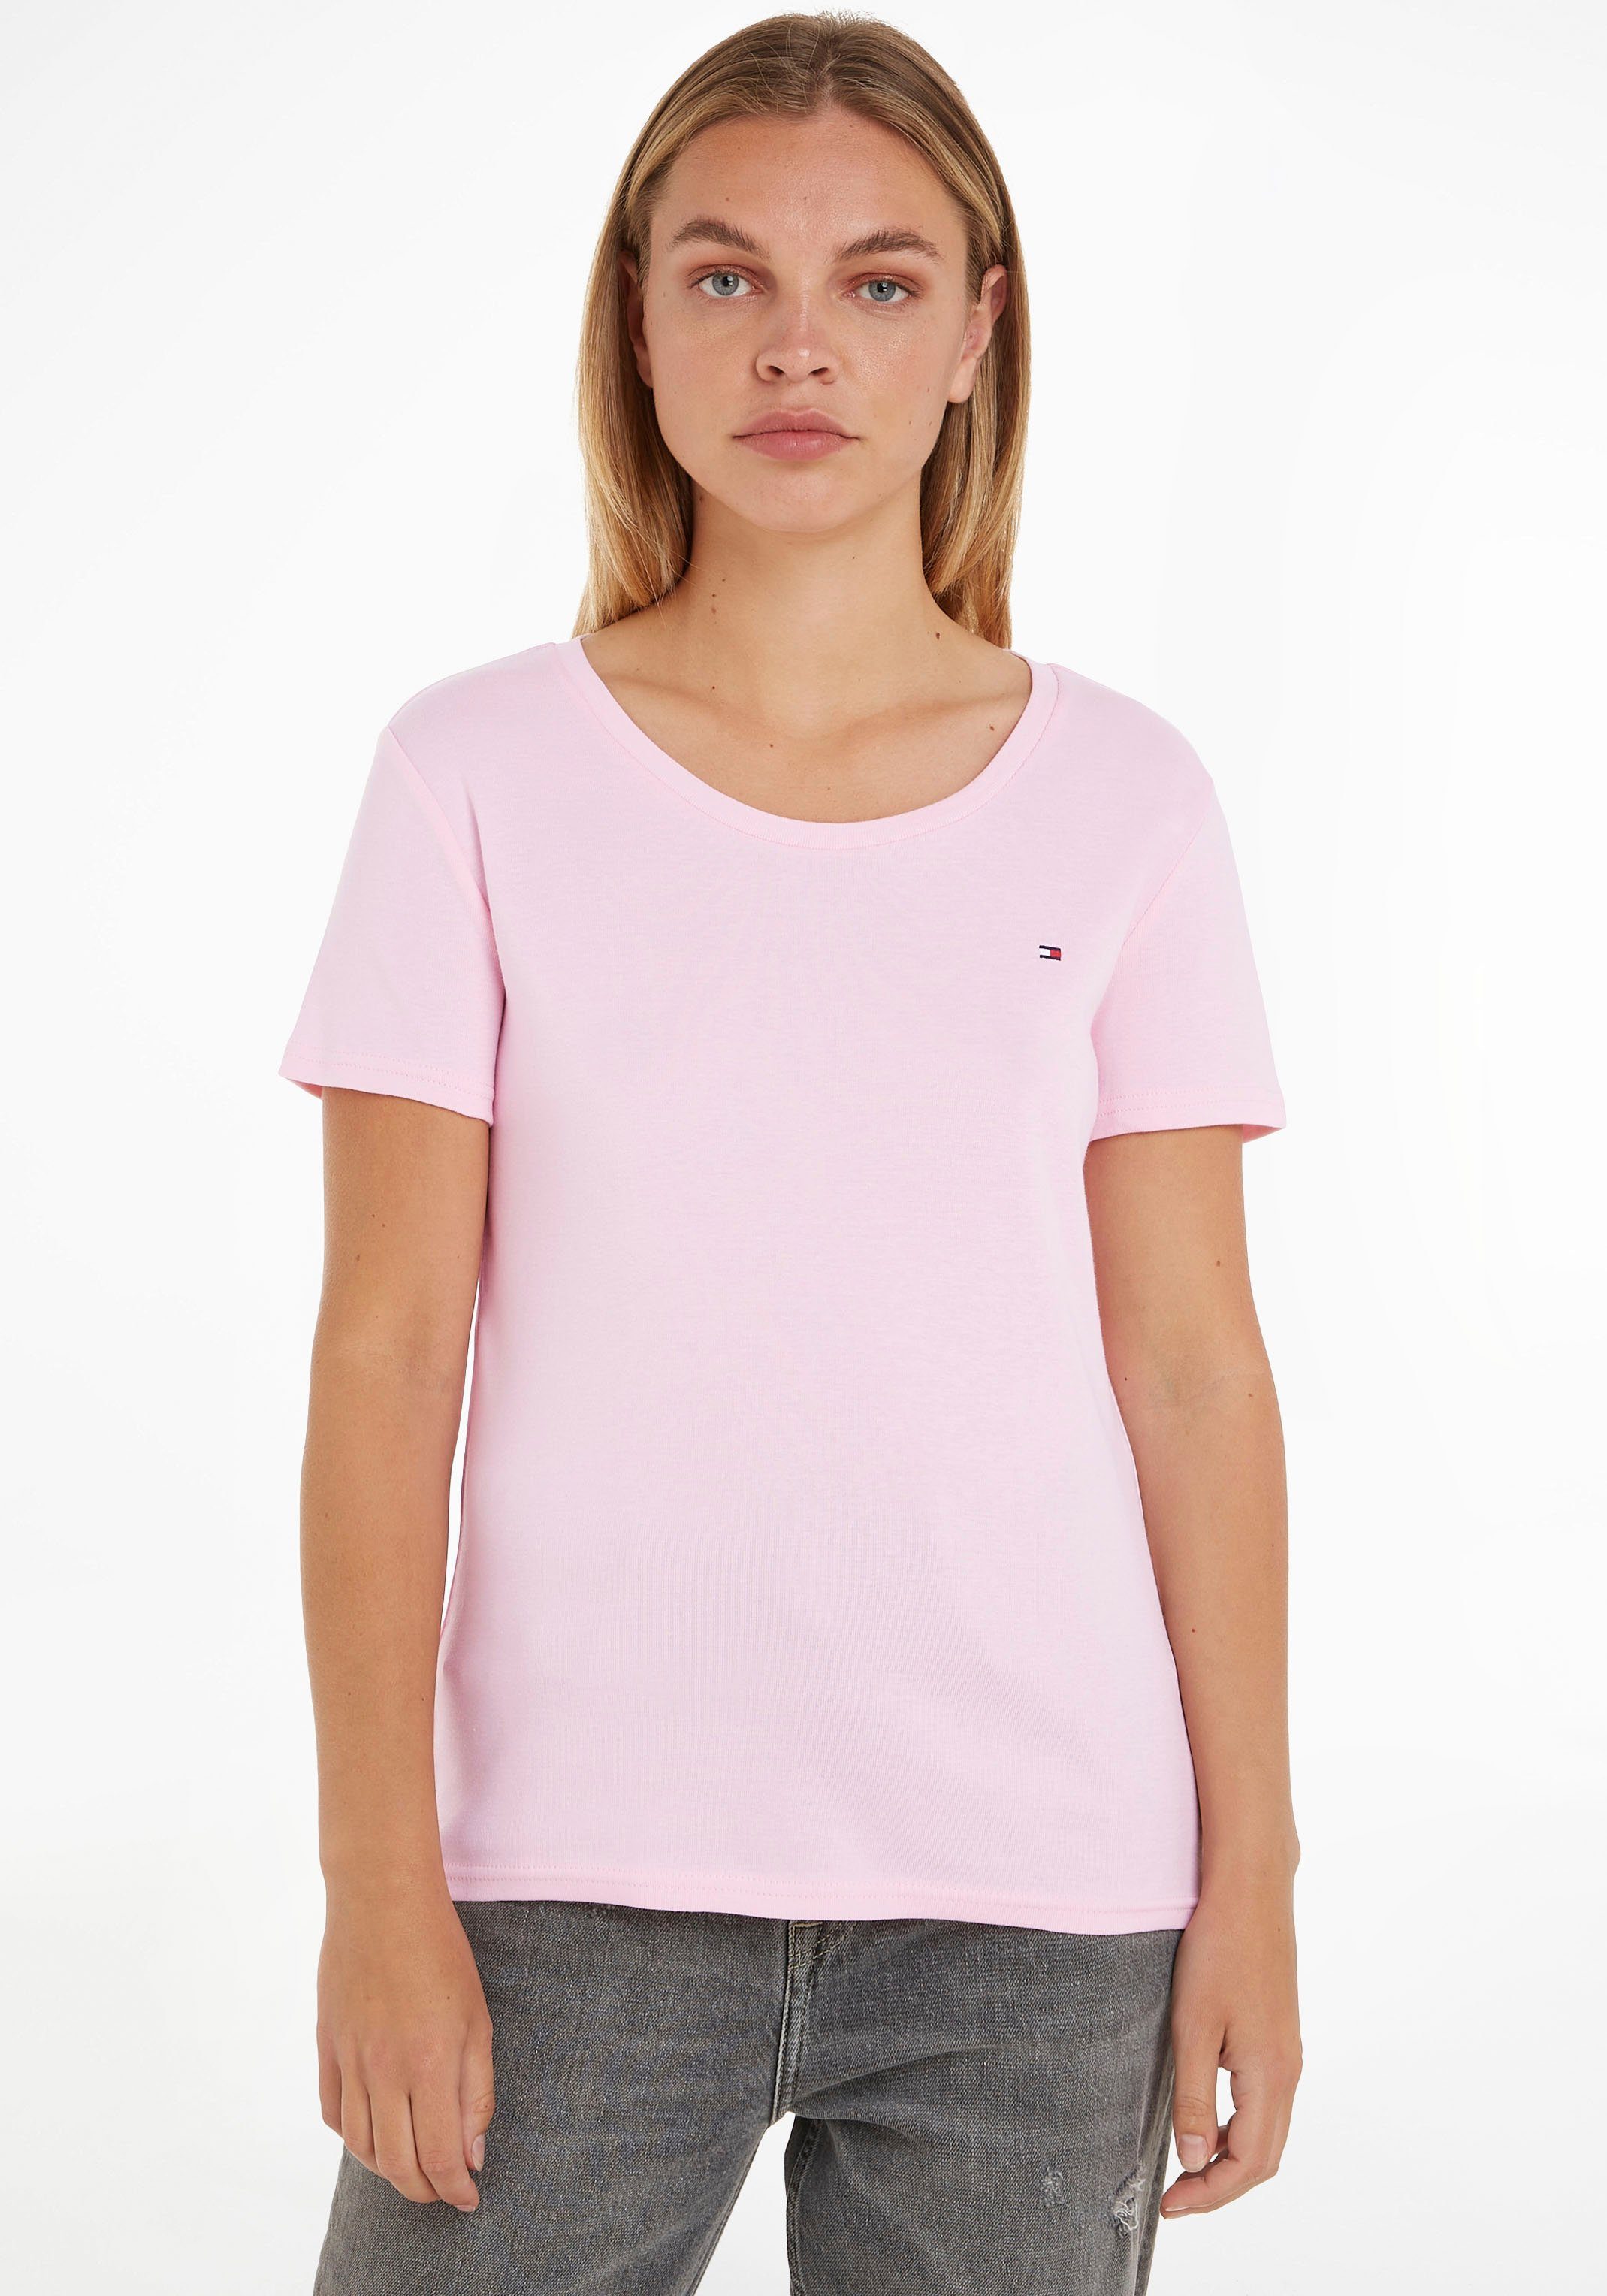 Rosa Damen T-Shirts kaufen » Pinke Damen T-Shirts | OTTO